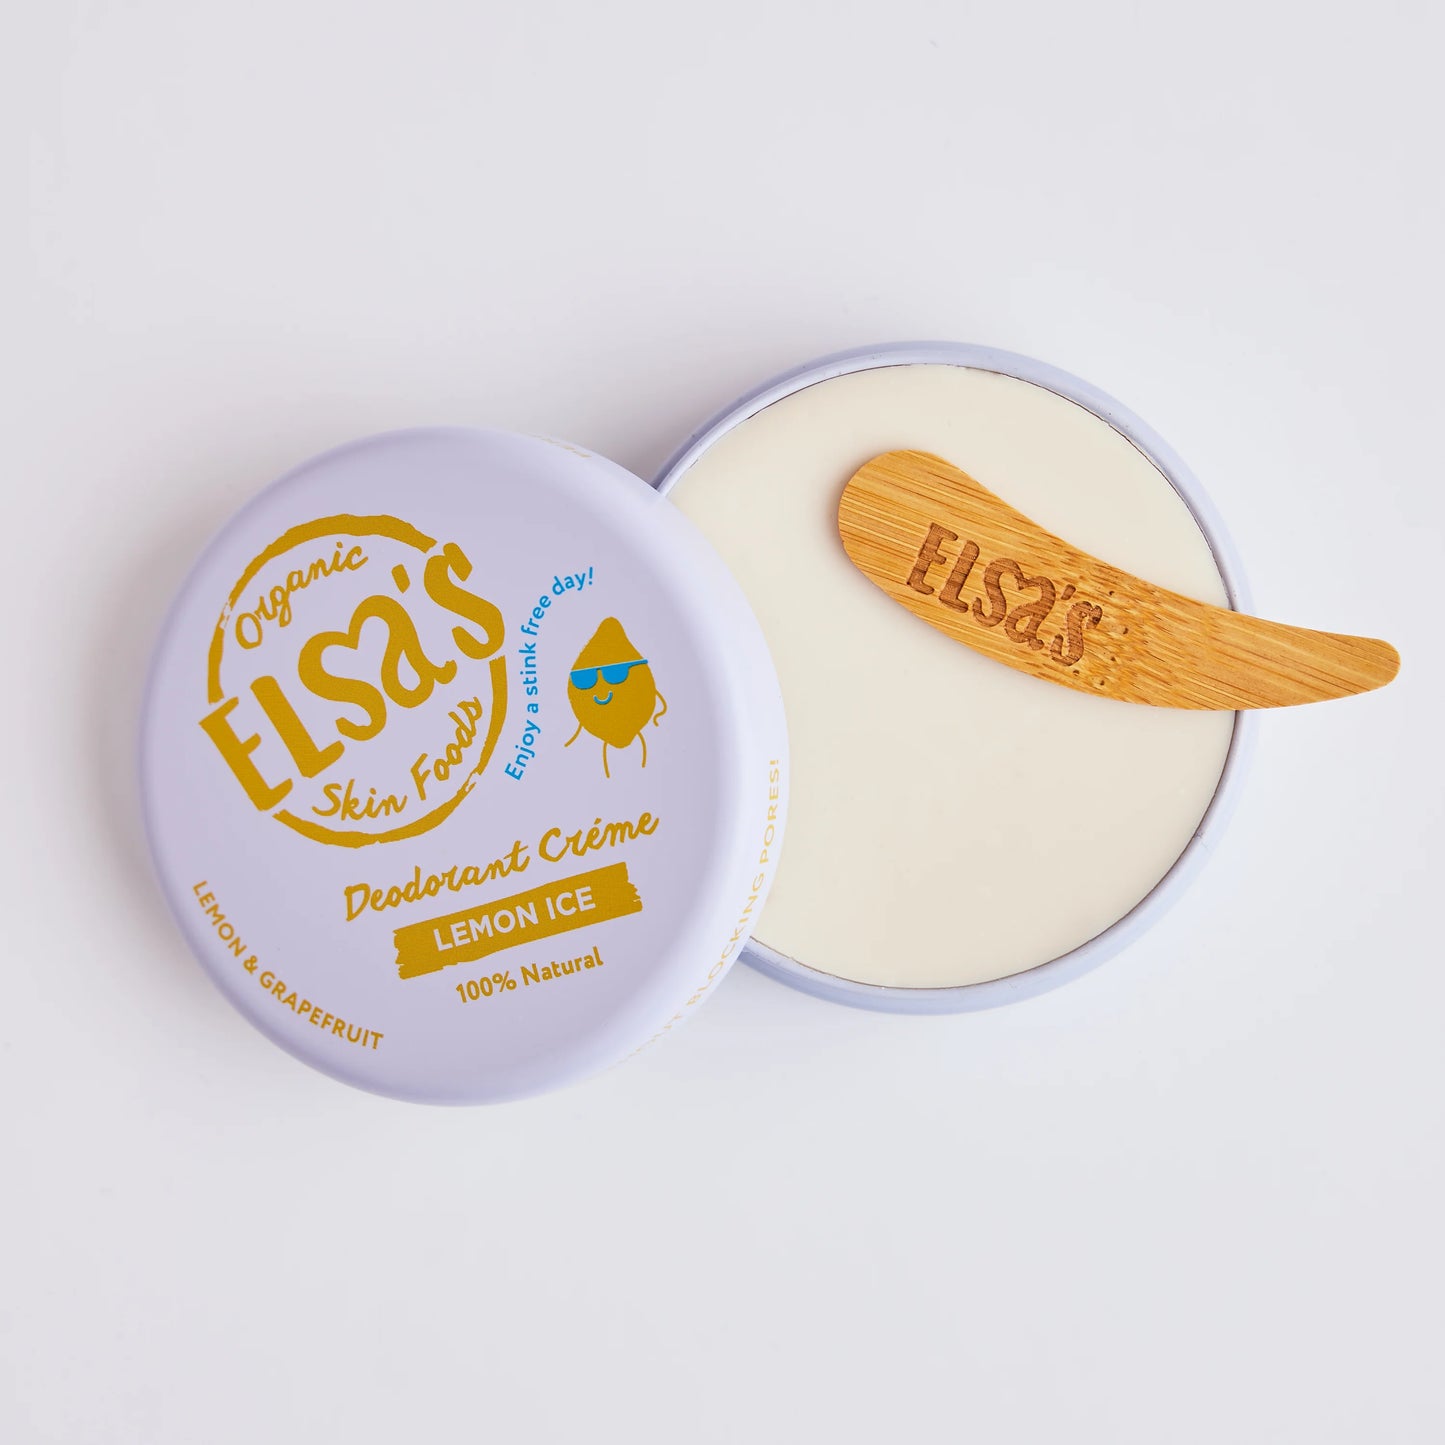 Elsa’s Organics - Natural Deodorant 50g Tin - Lemon Ice